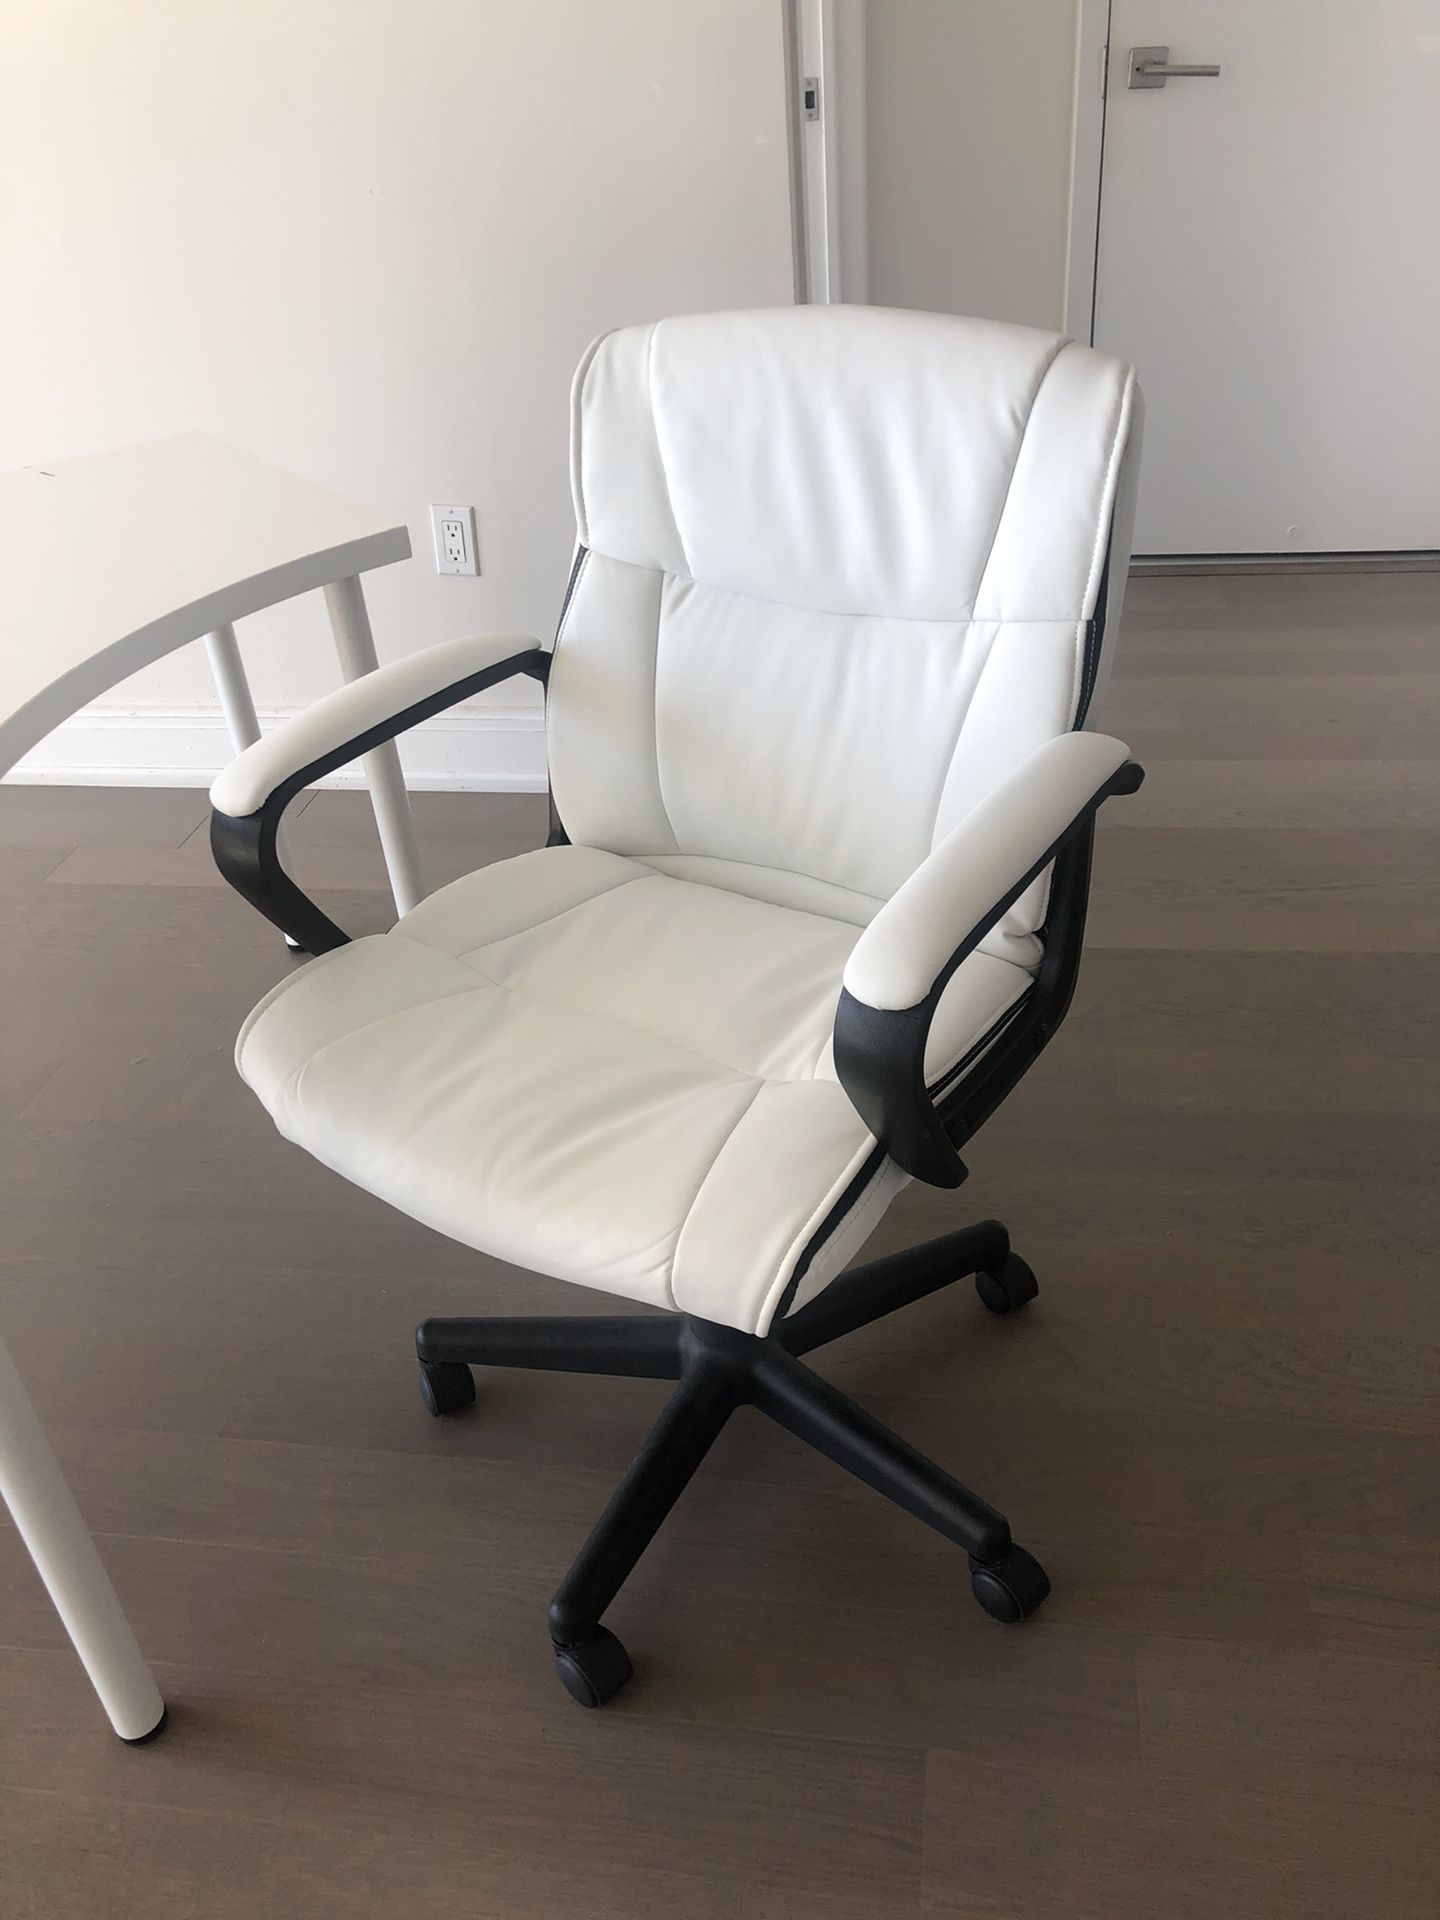 AmazonBasics Leather-Padded, Ergonomic, Adjustable, Swivel Office Desk Chair with Armrest, white